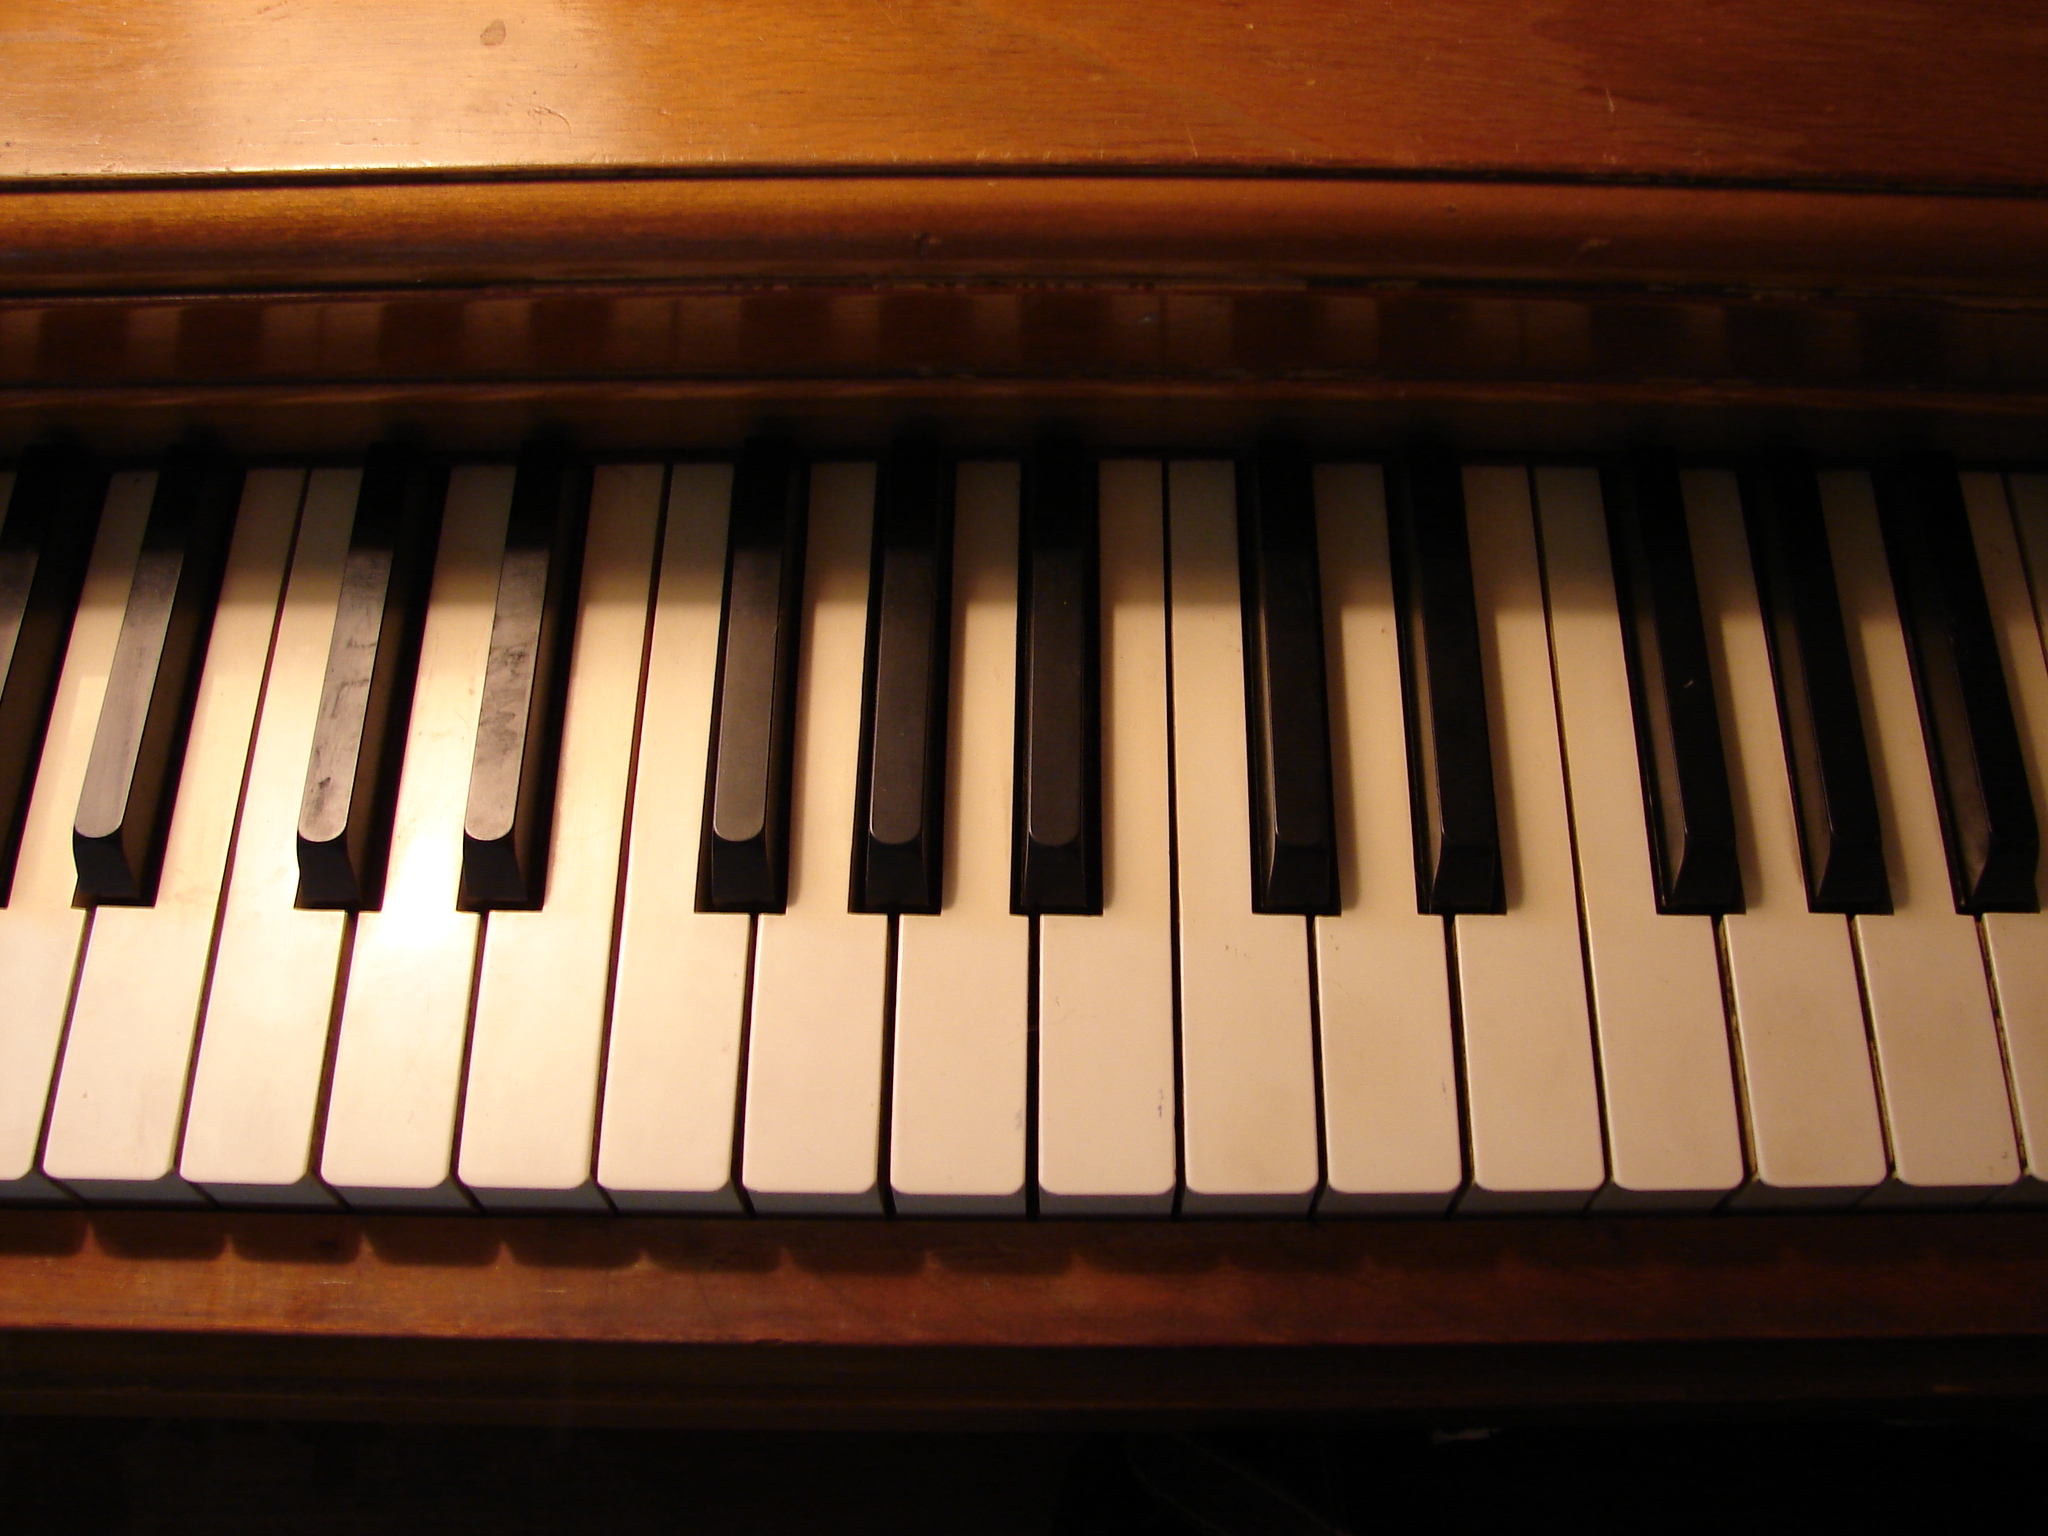 Piano Keys 2 by FantasyStock on Clipart library